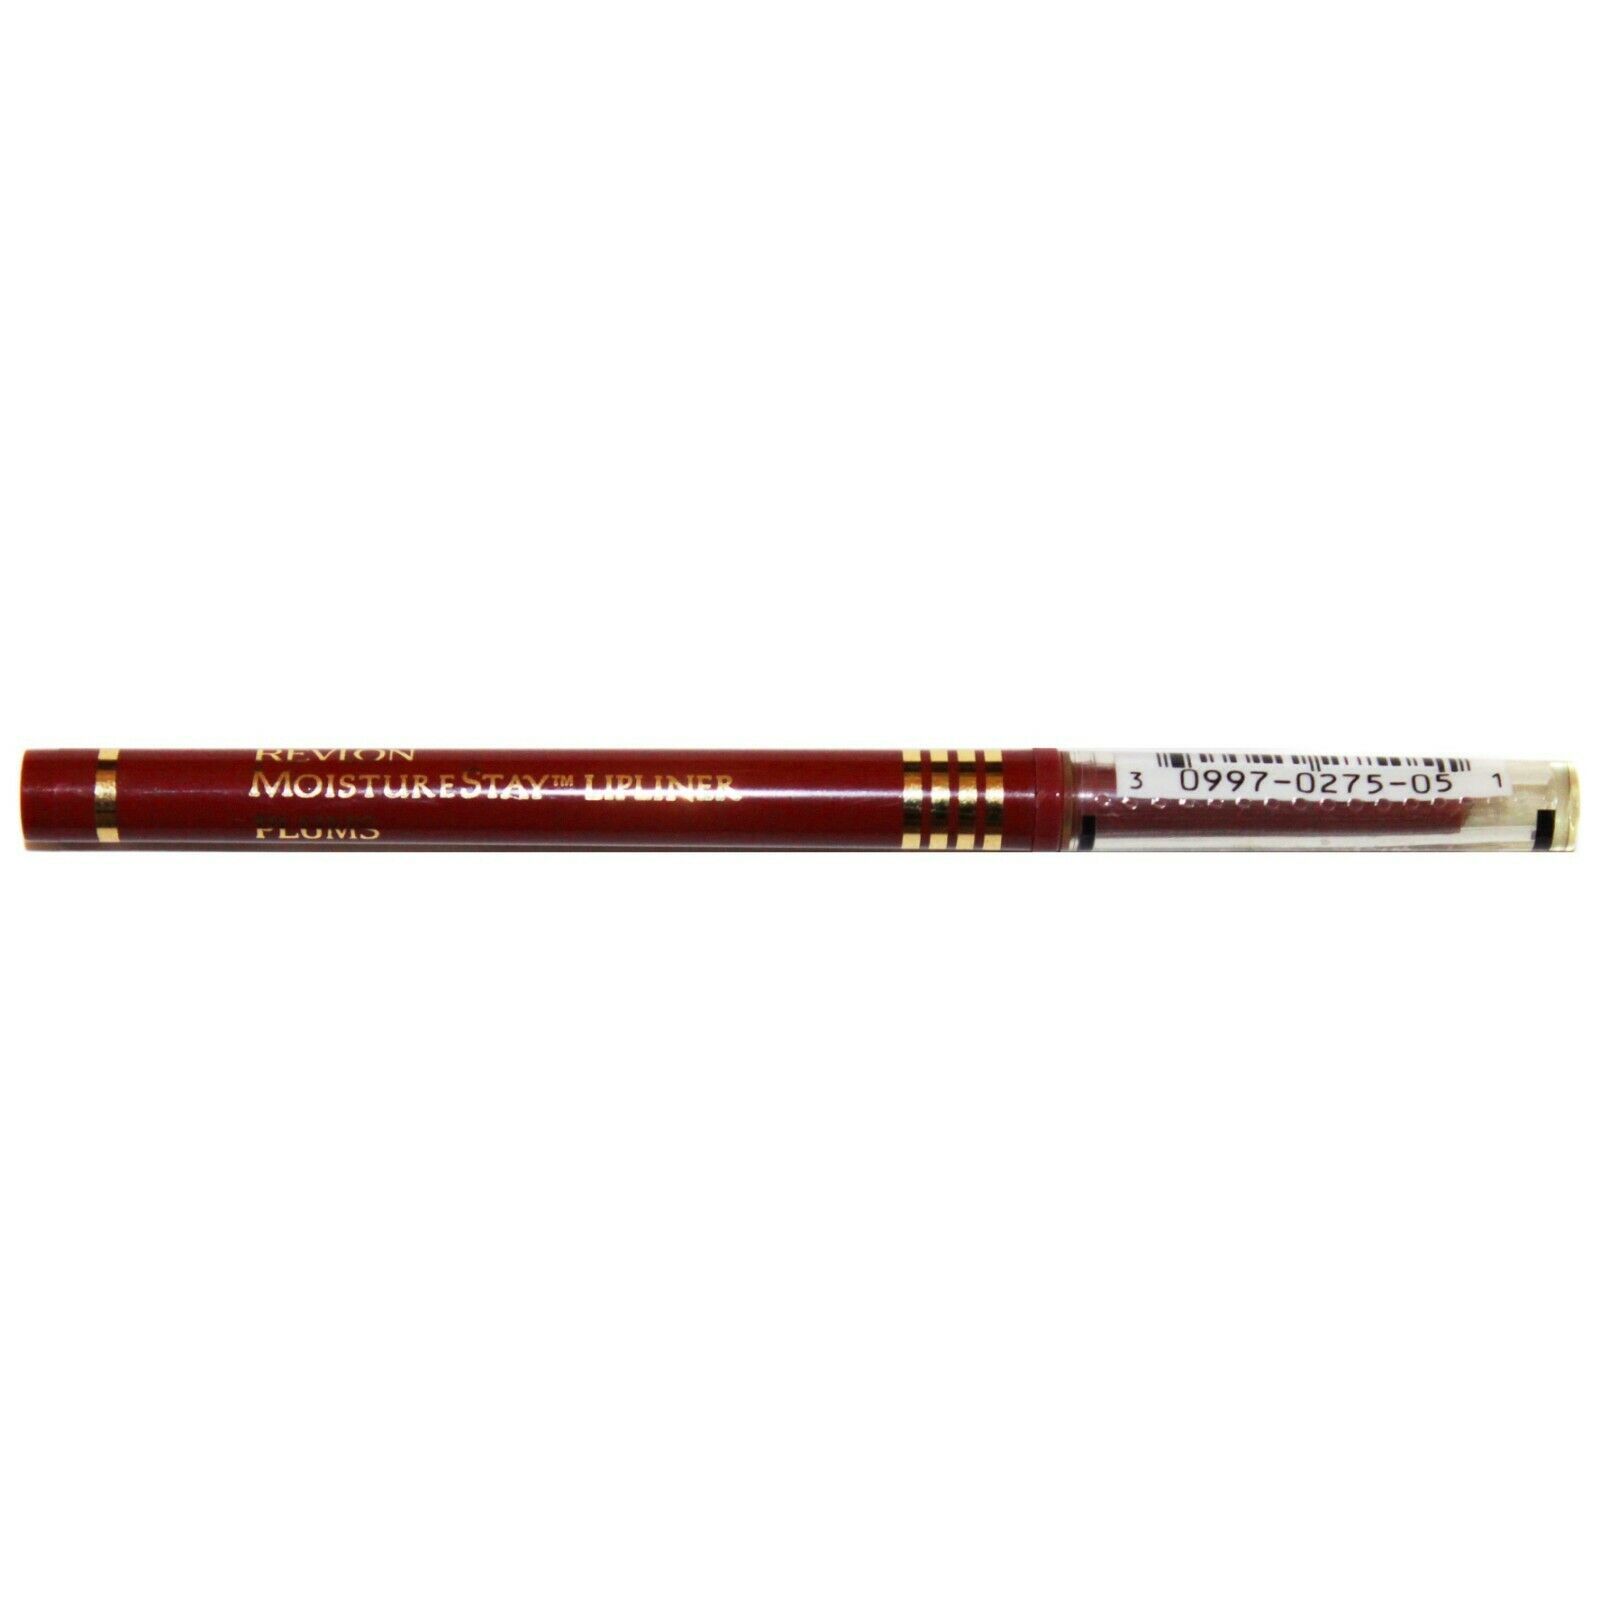 REVLON* Pencil MOISTURESTAY Color Lip Liner LIPLINER Makeup PLUMS Twist-Up NEW! - $12.99